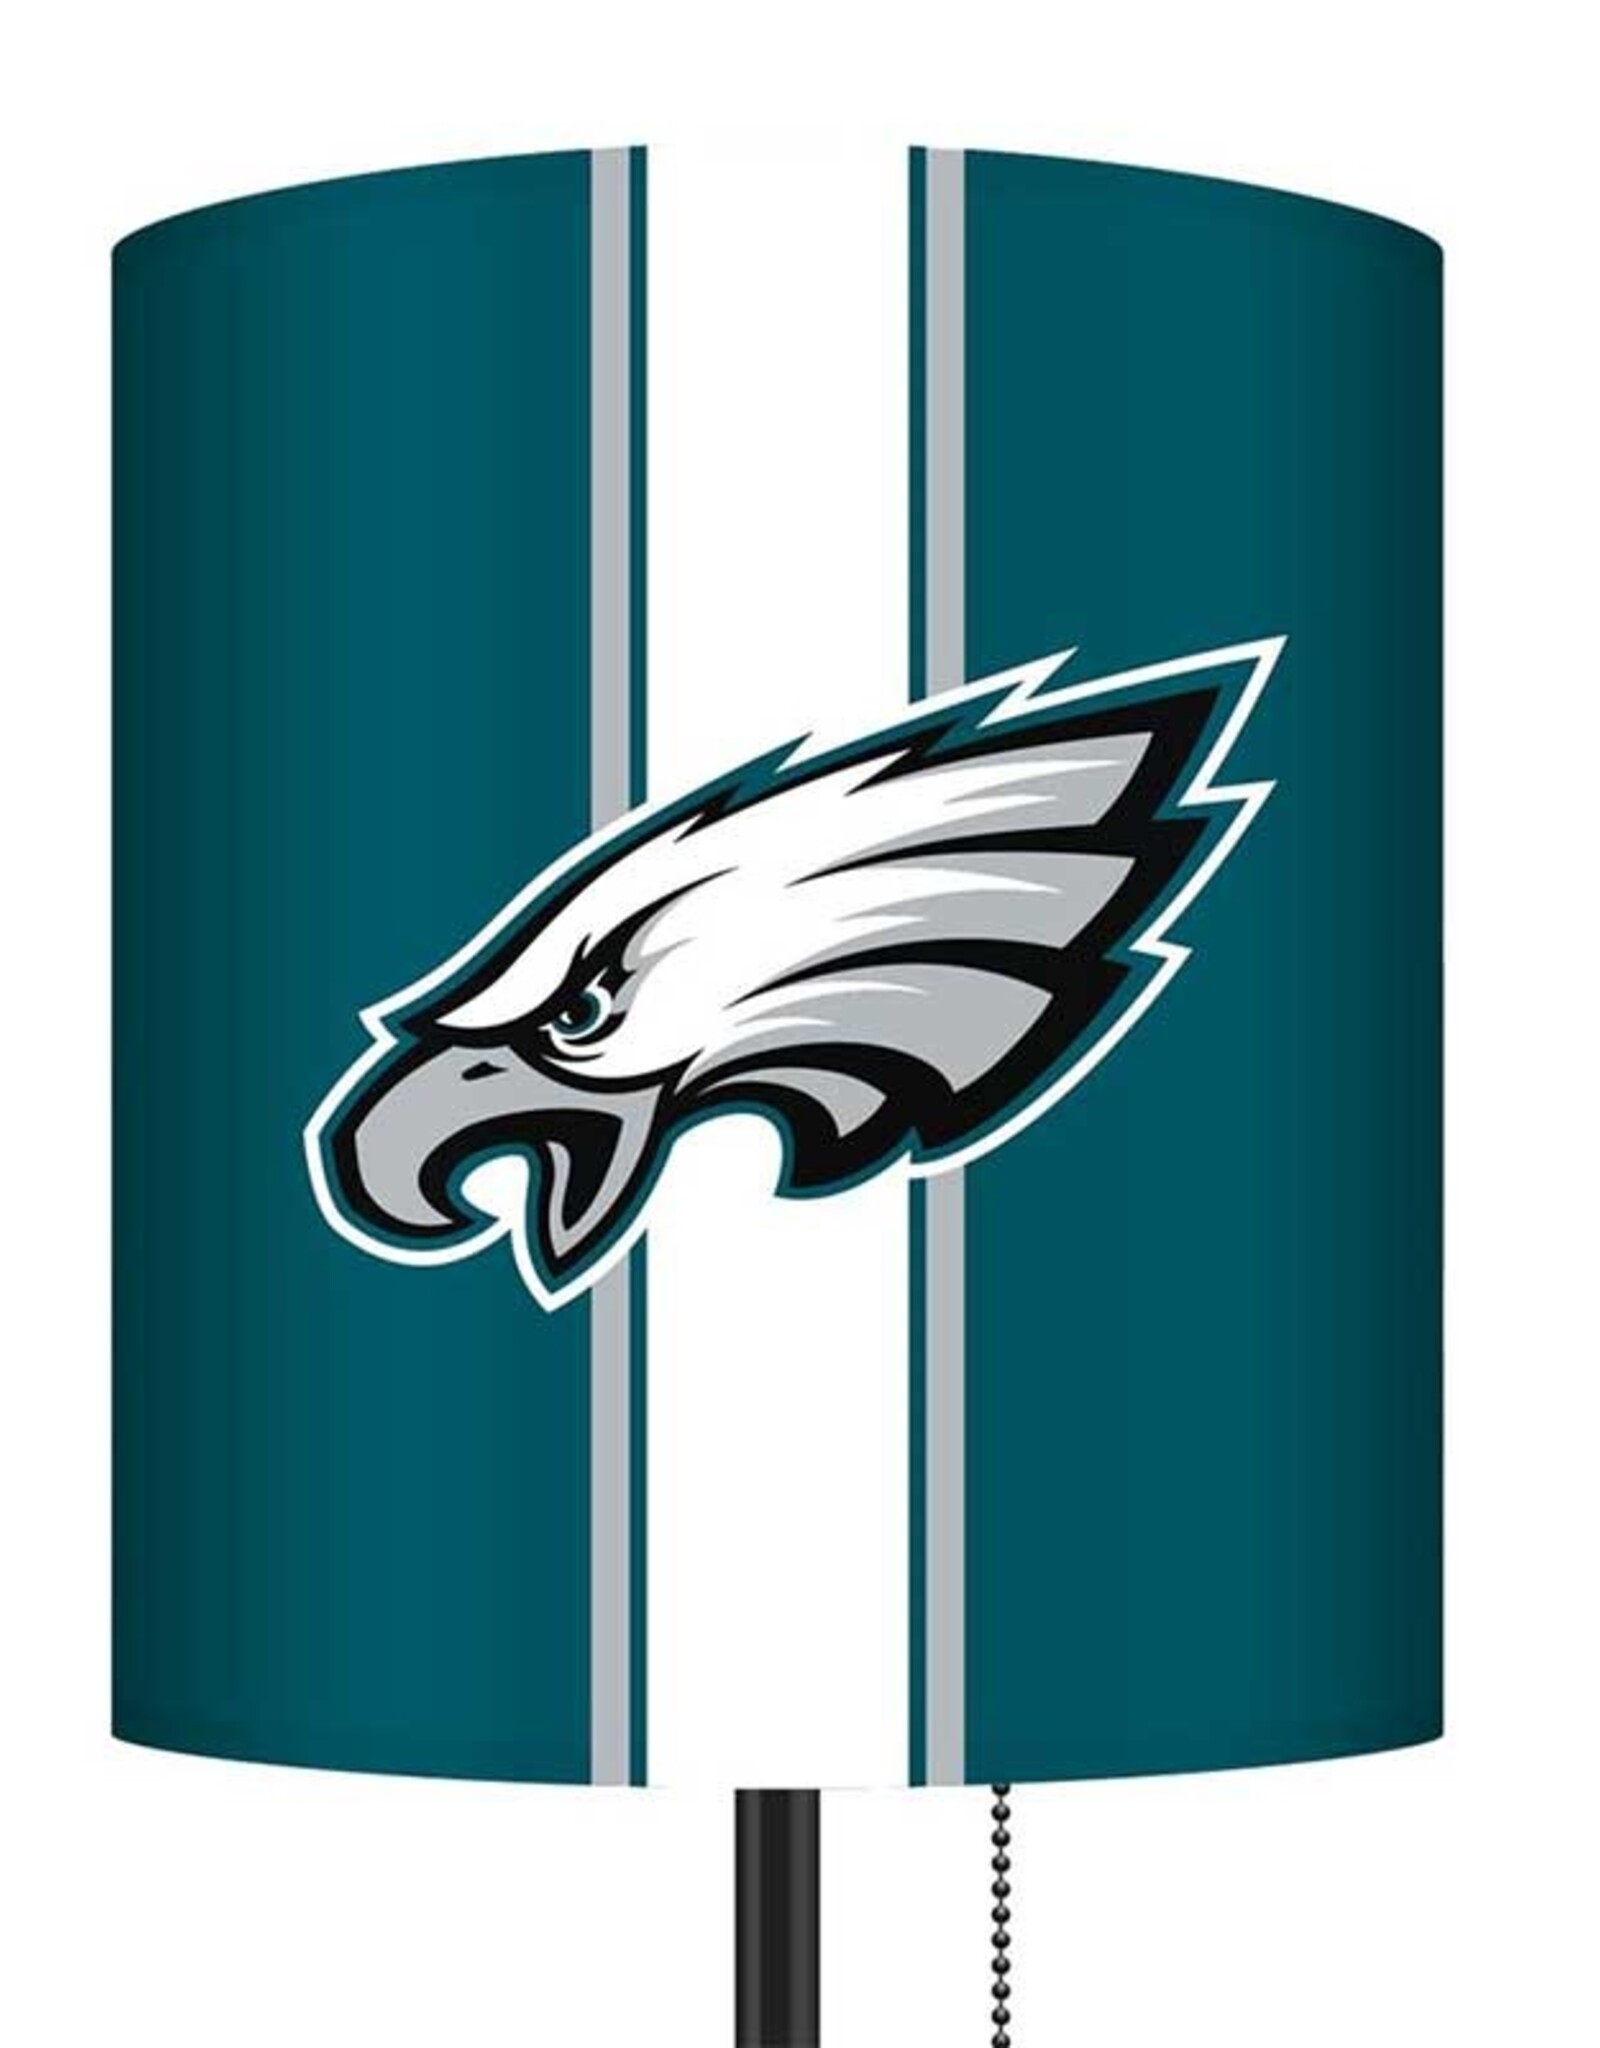 Imperial Philadelphia Eagles Table Lamp / FINAL SALE